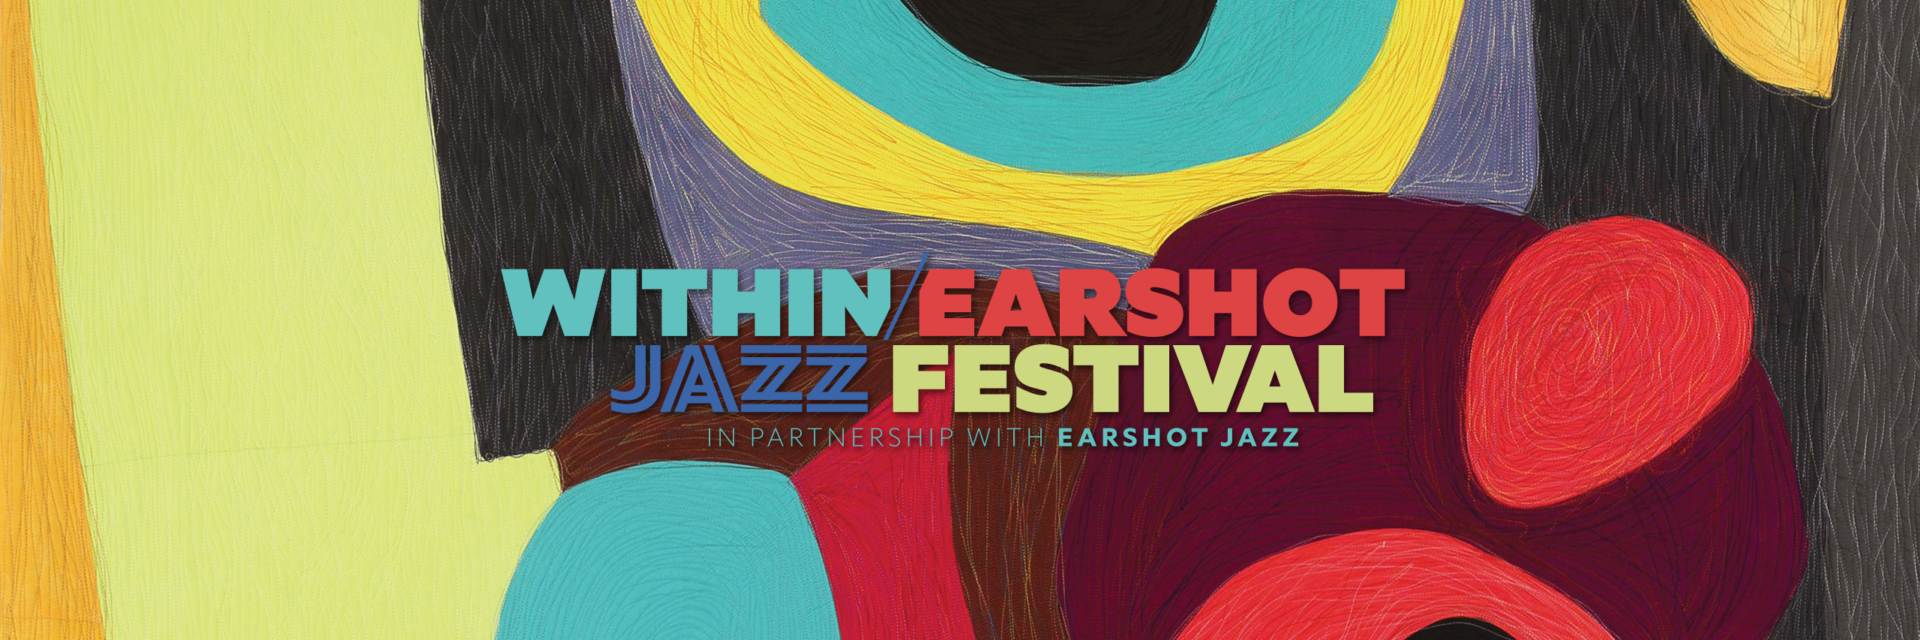 Within/Earshot Jazz Festival at BIMA